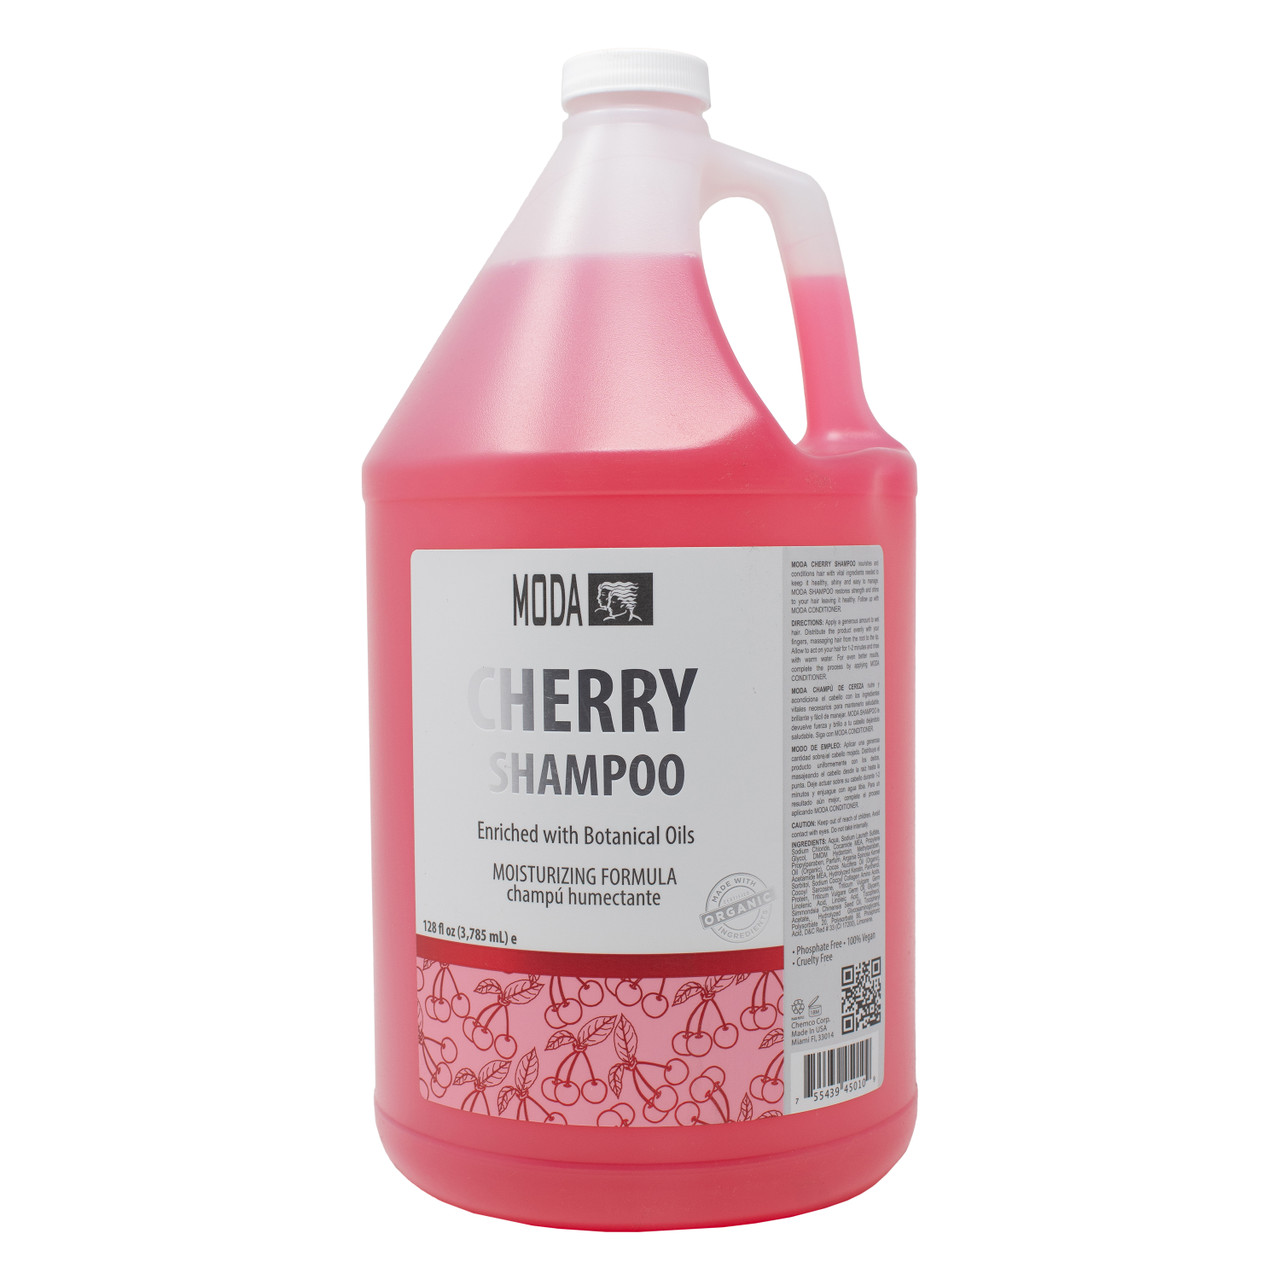 Moda Cherry Shampoo – Gallon